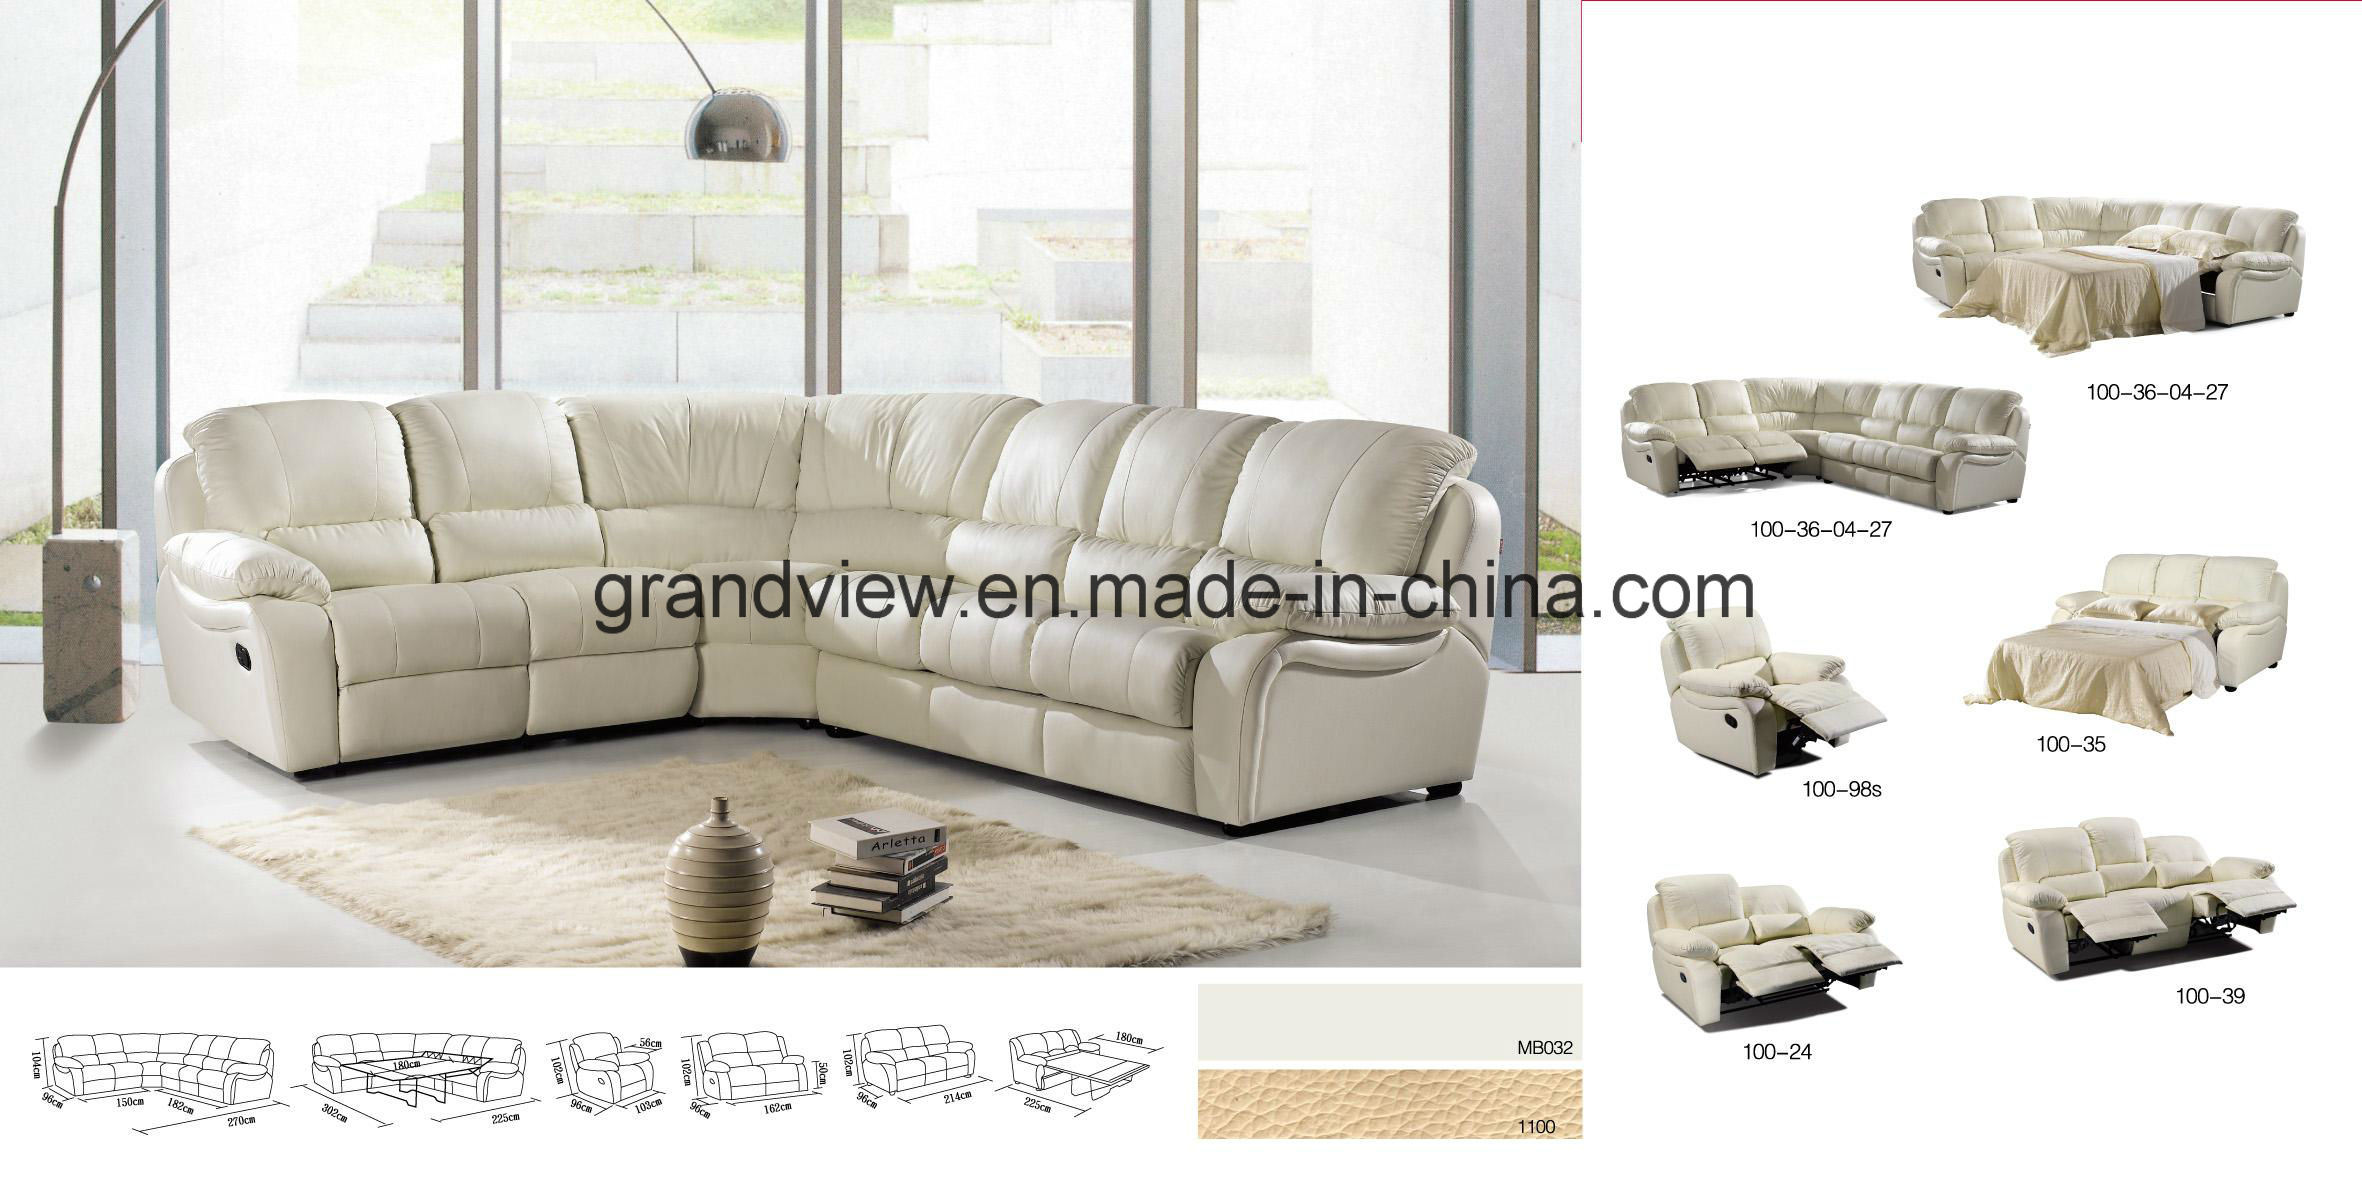 Home Furniture Leather Functional Sofa, Comfortable Sofa, Reclining Sleeper Sofa Bed